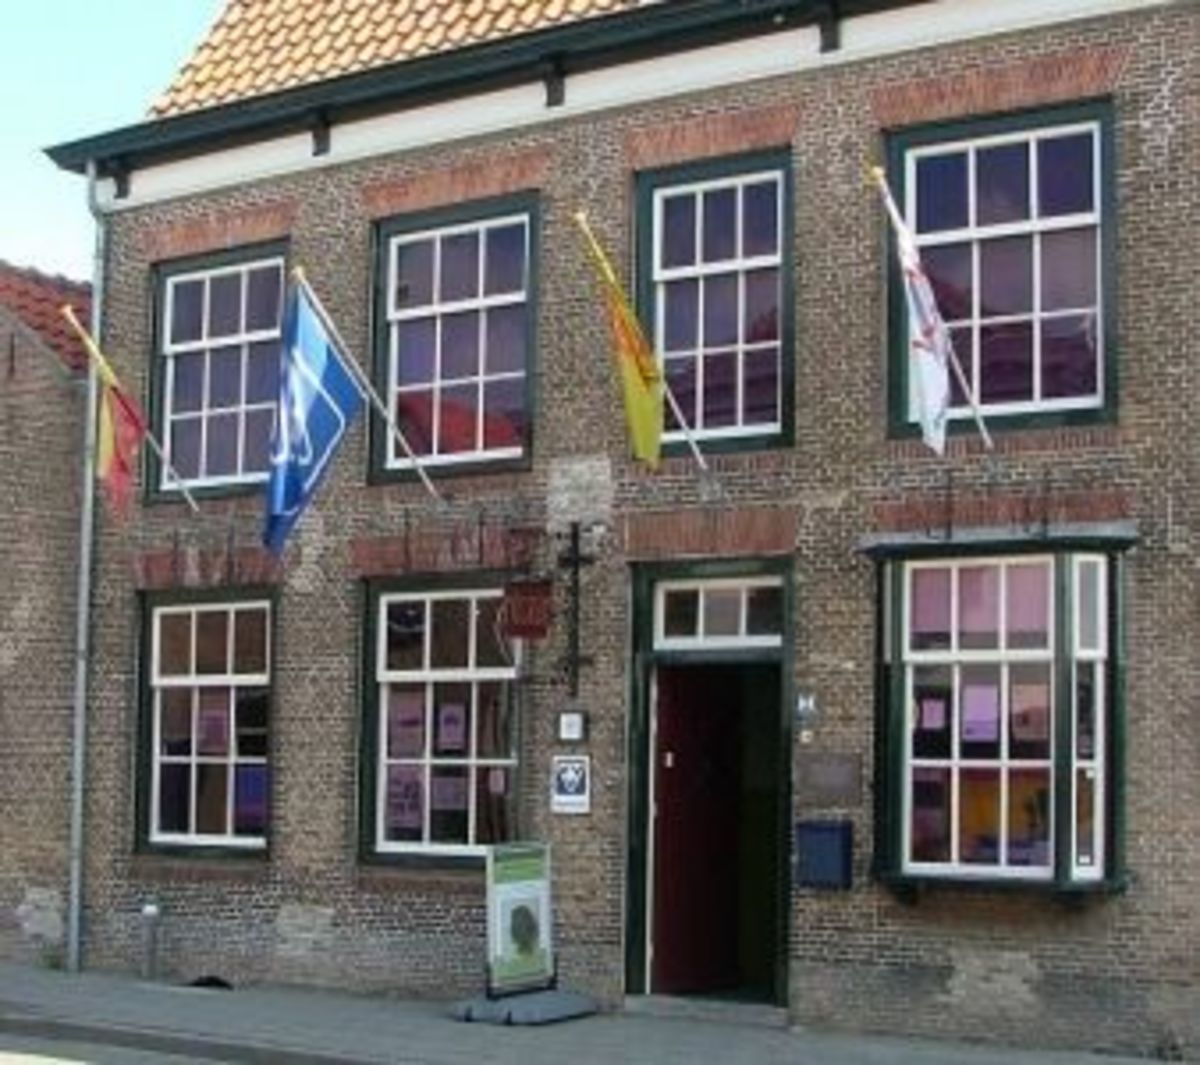 The Archeologic museum in Aardenburg